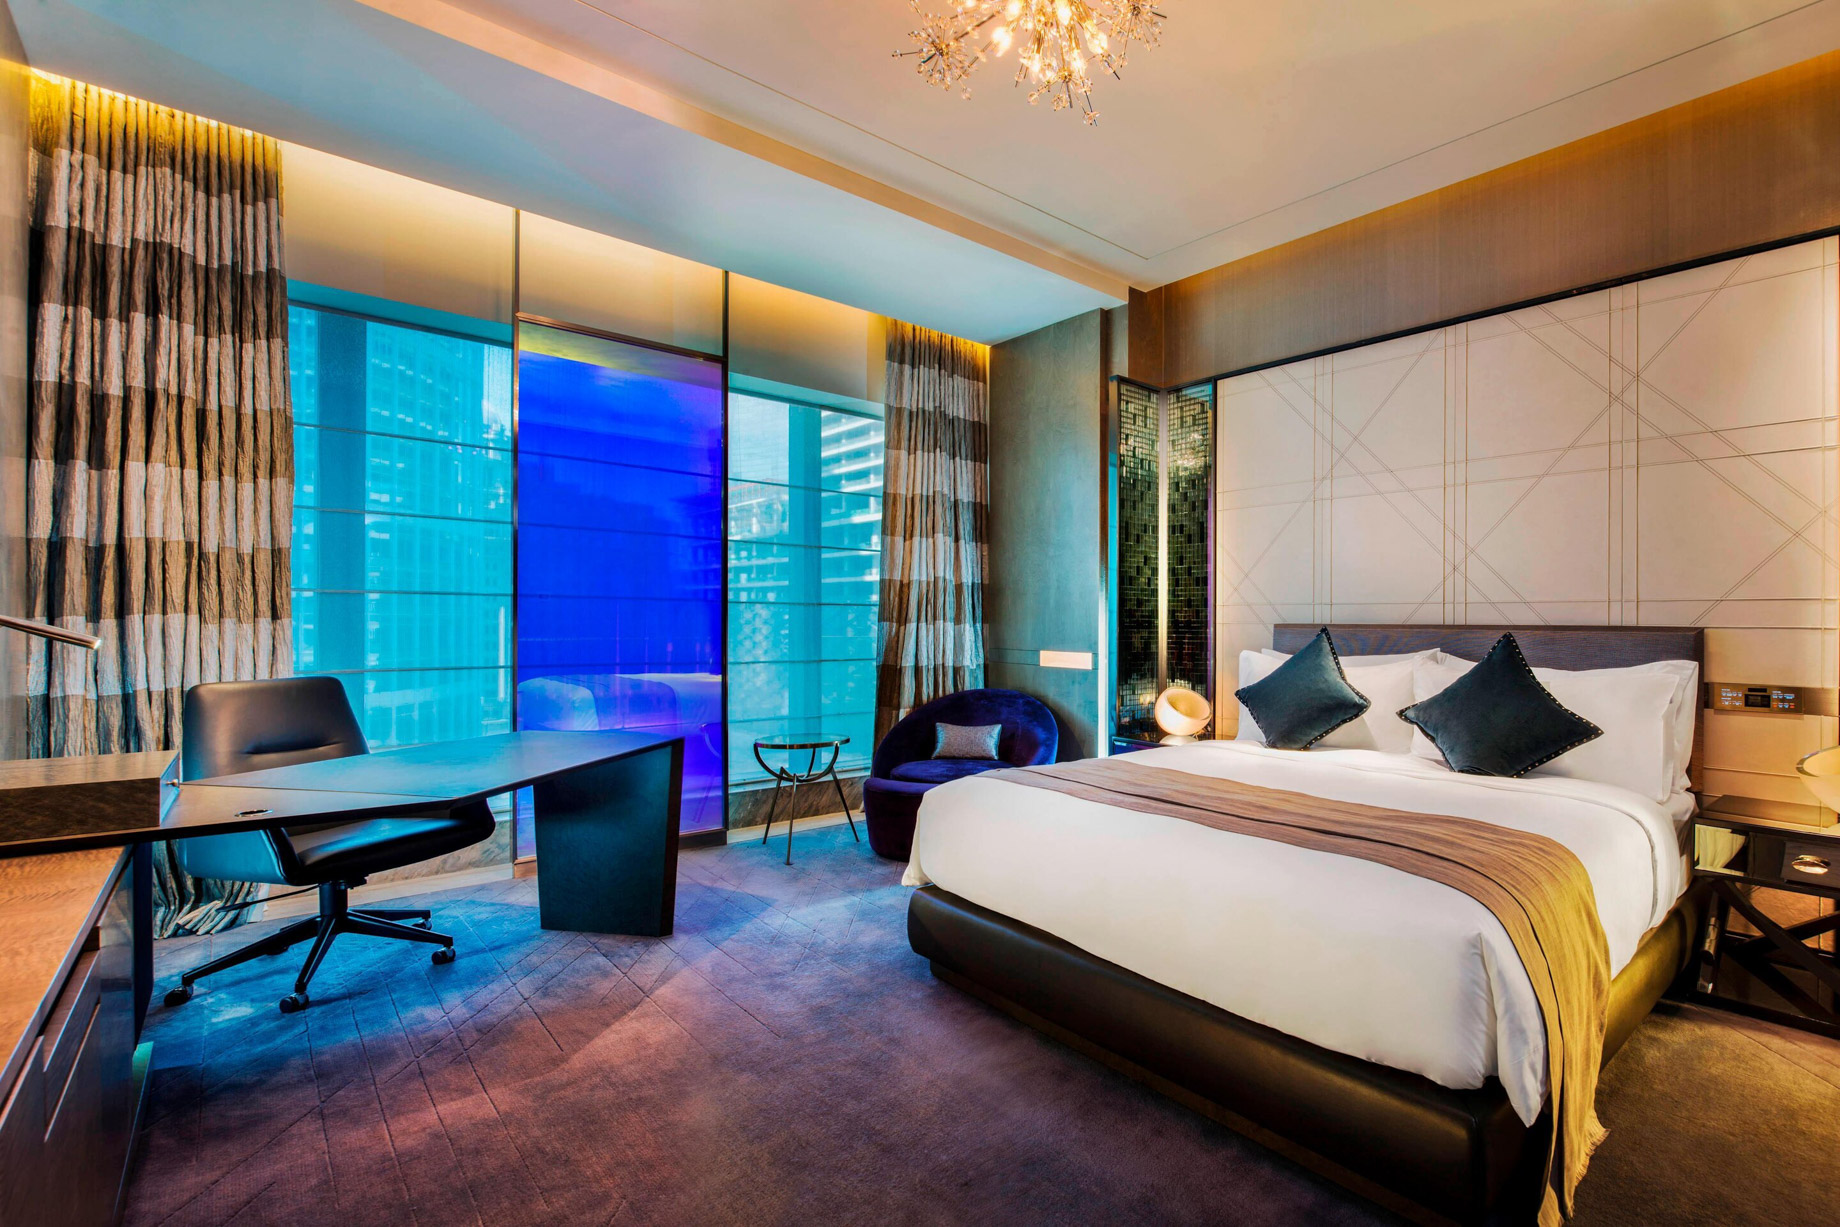 W Guangzhou Hotel – Tianhe District, Guangzhou, China – Spectacular Design Guest Room Jewel Design